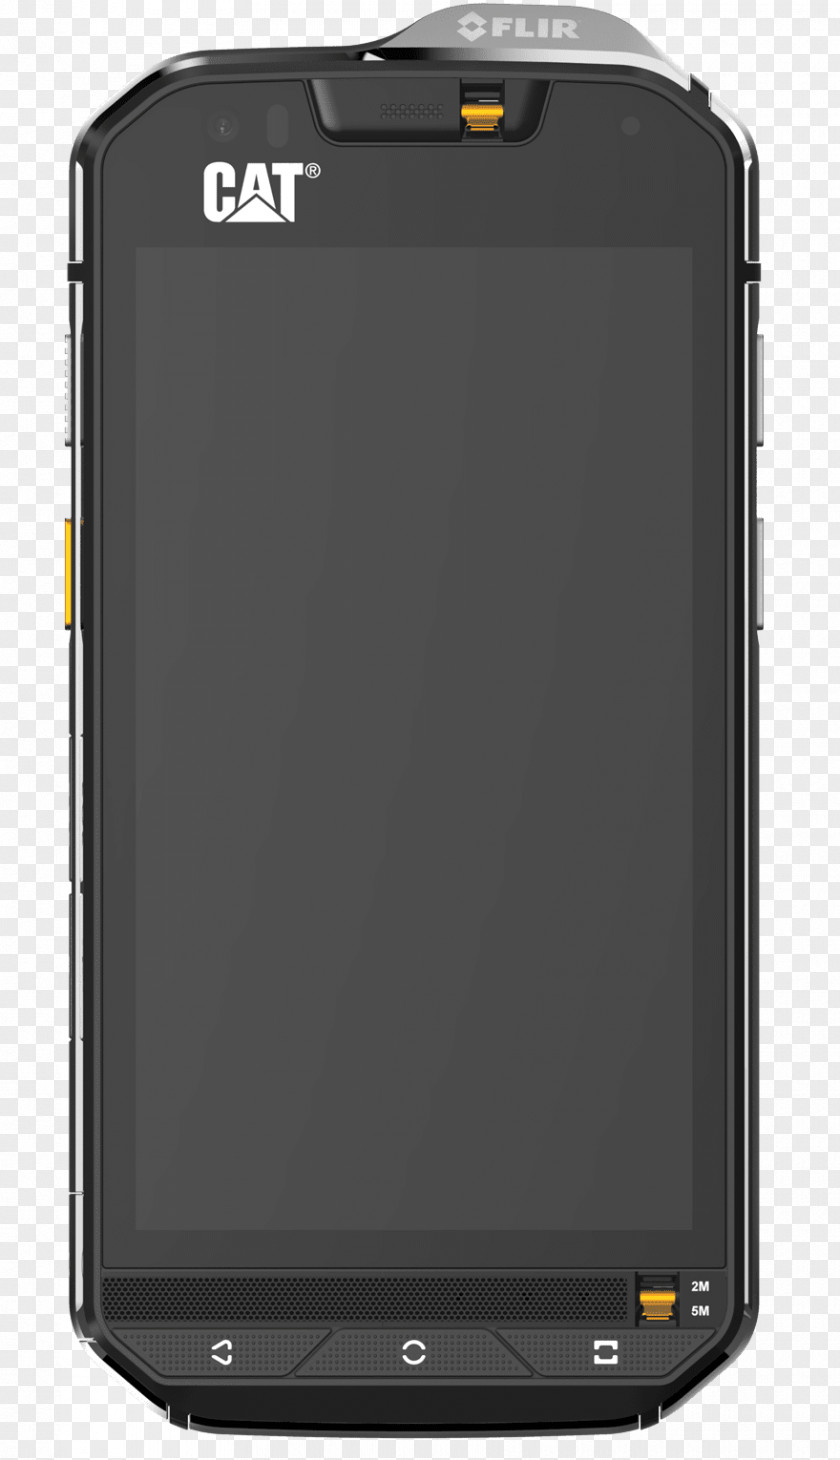 Smartphone Cat Phone S50 Caterpillar Inc. IPhone PNG